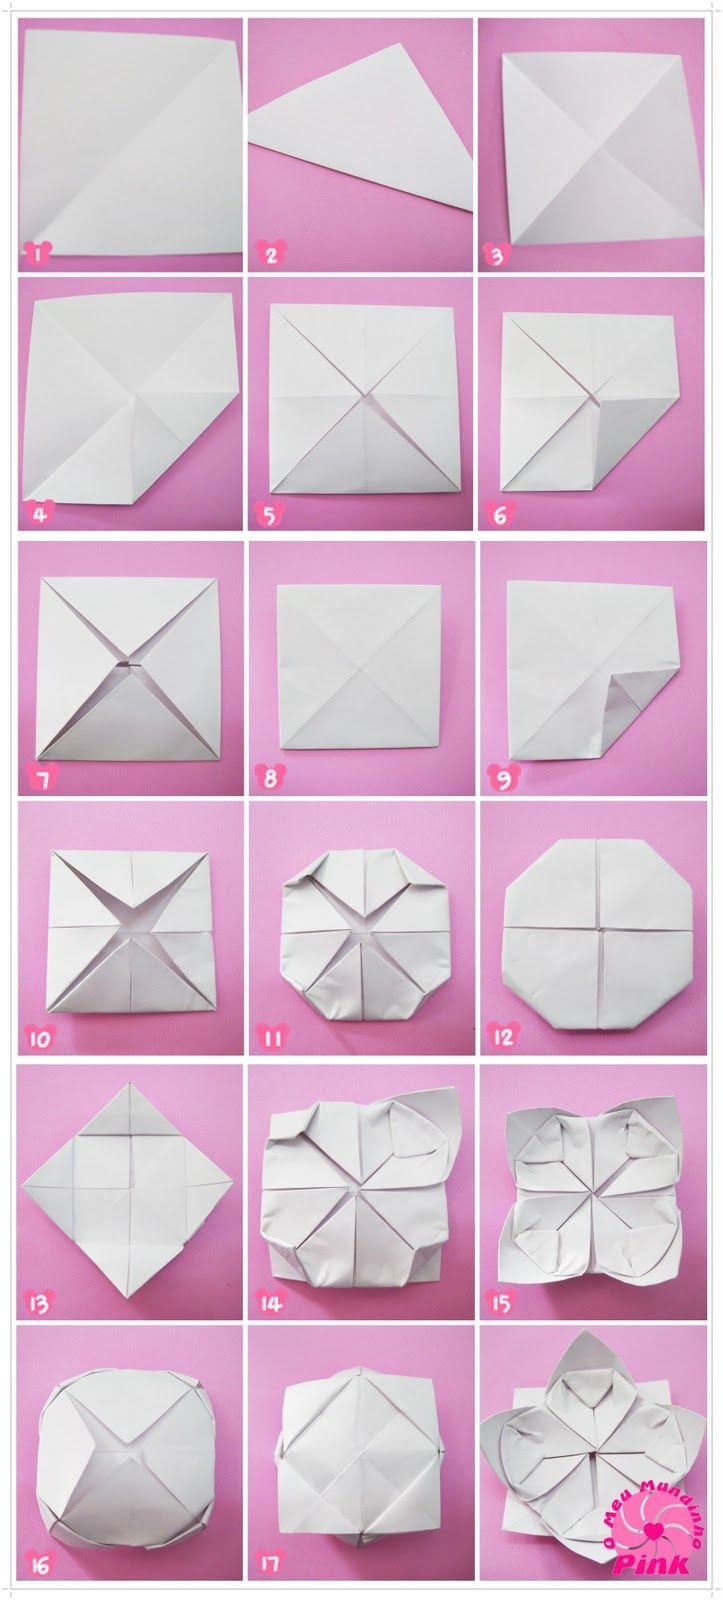 Оригами цветок лотоса схема пошагово